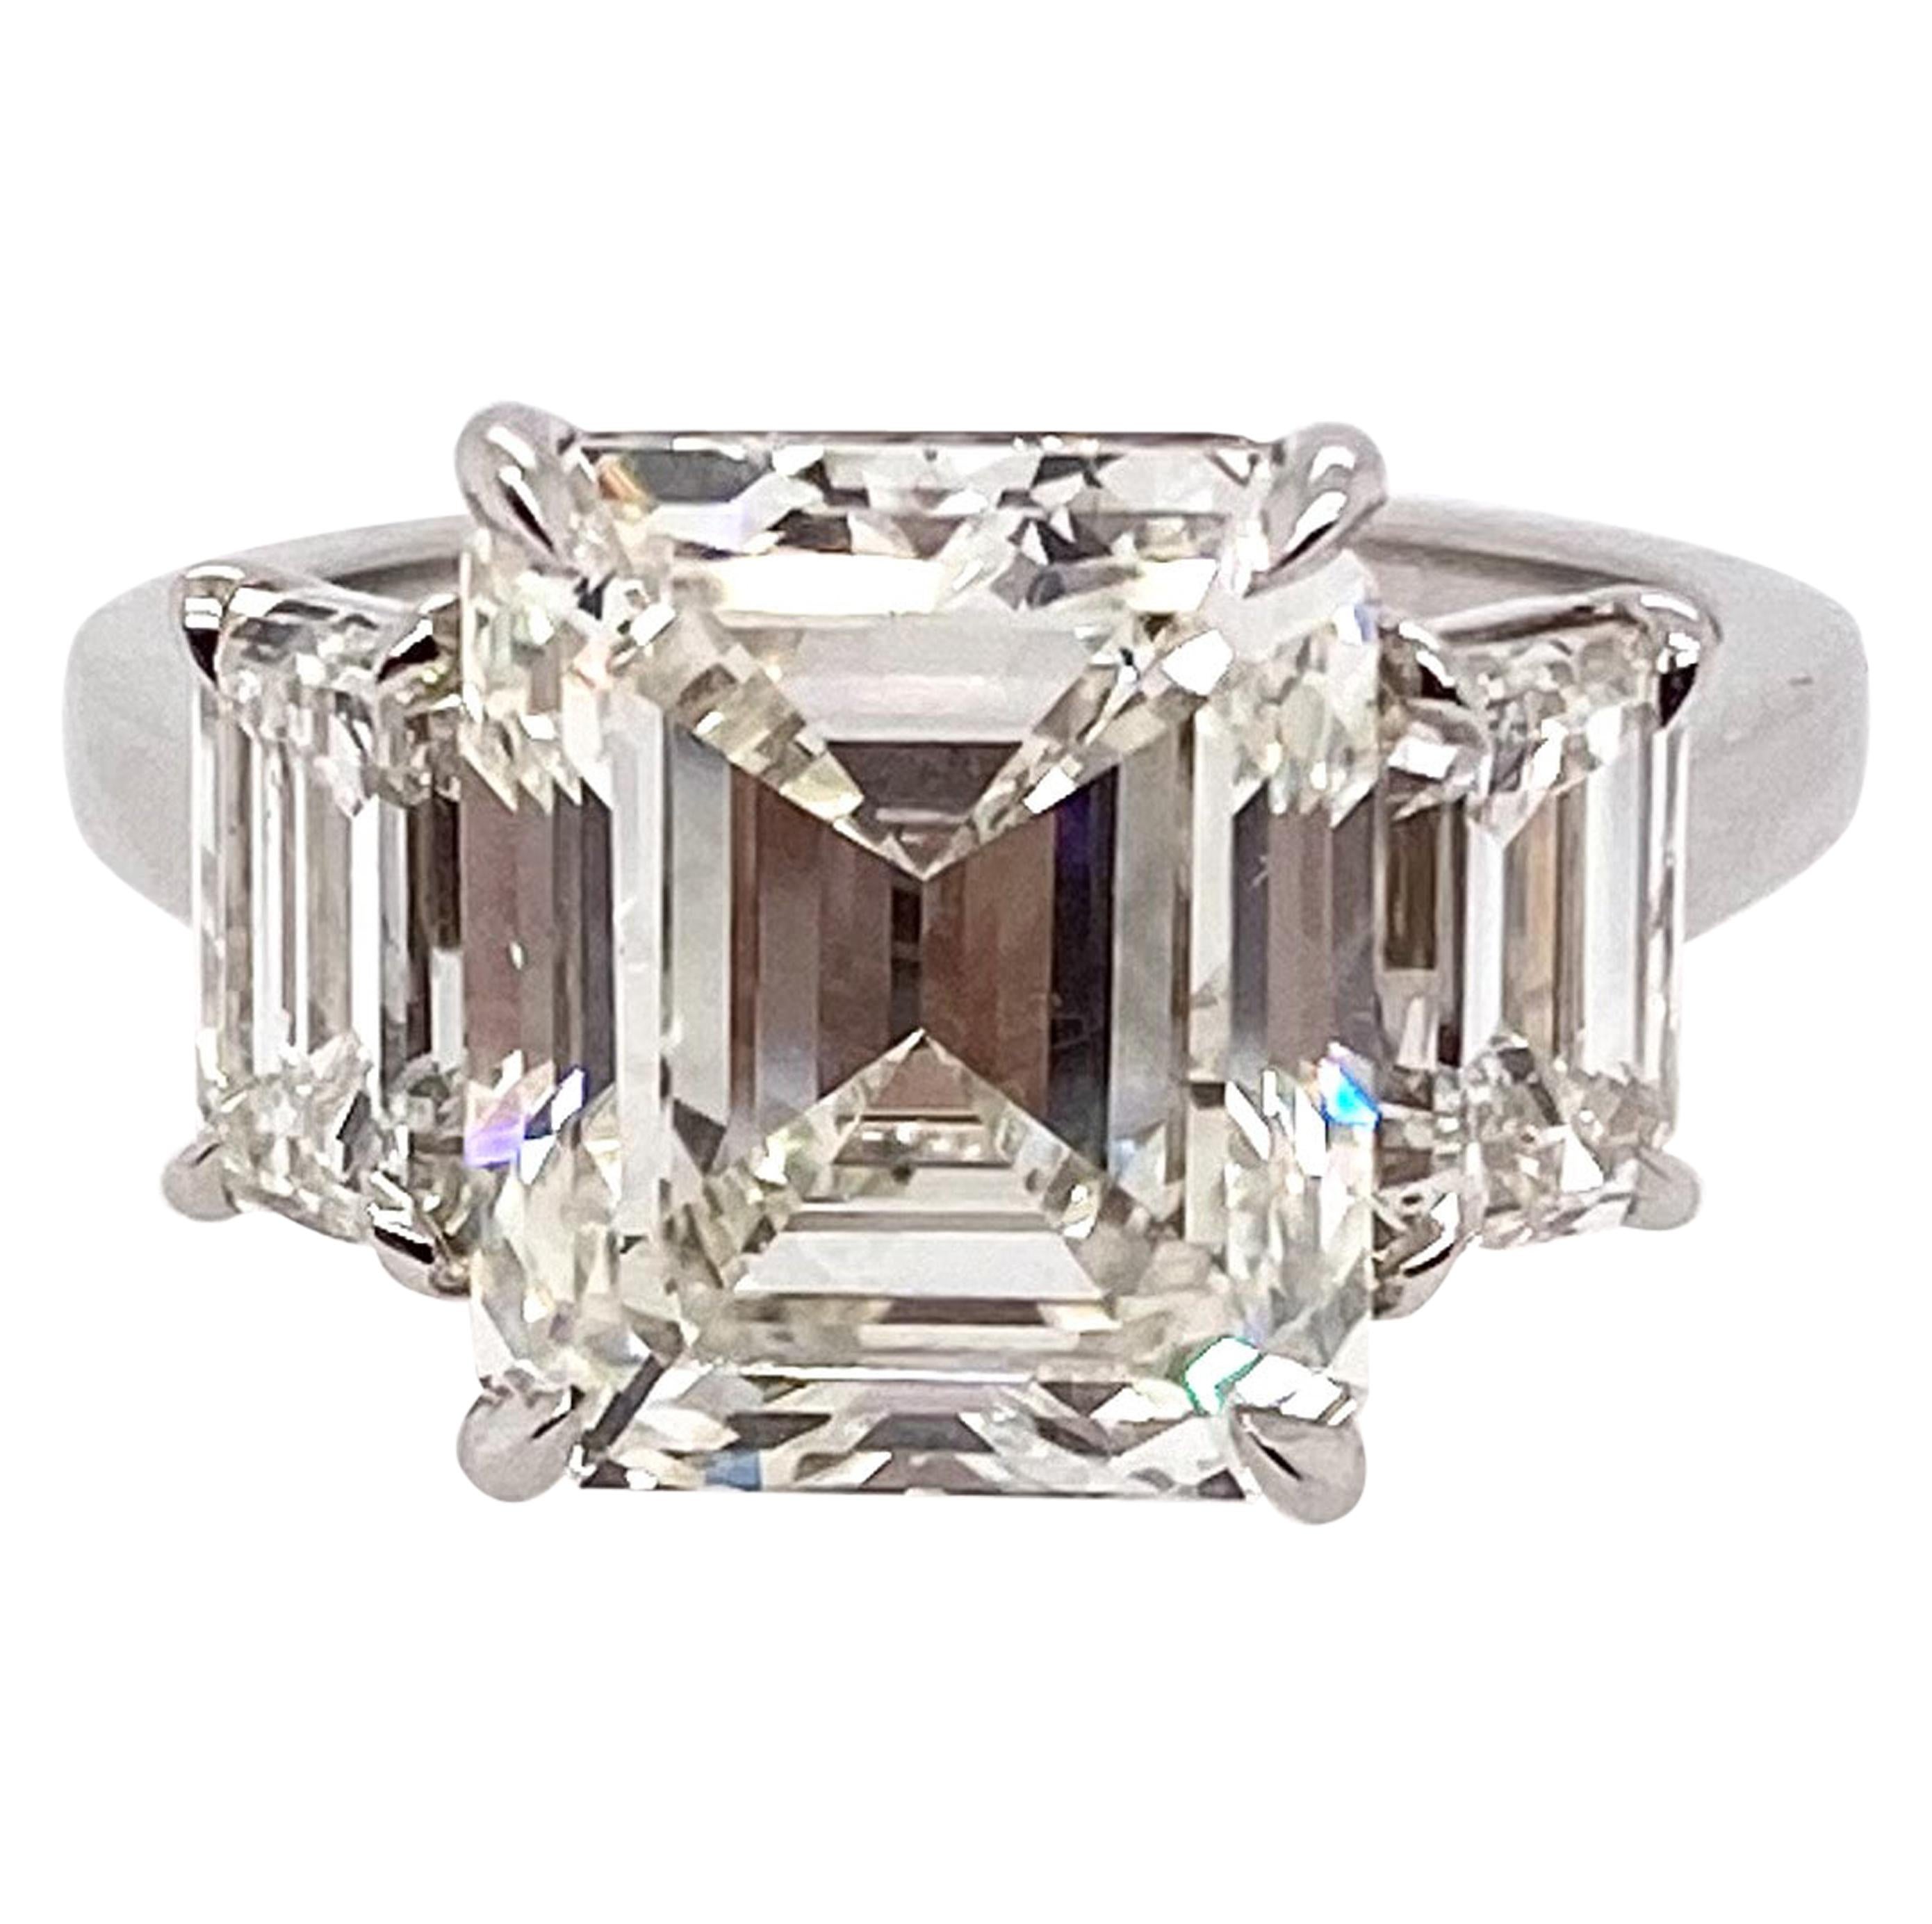 Ethonica Certified Three-Stone Emerald-Cut Diamond Ring in Platinum